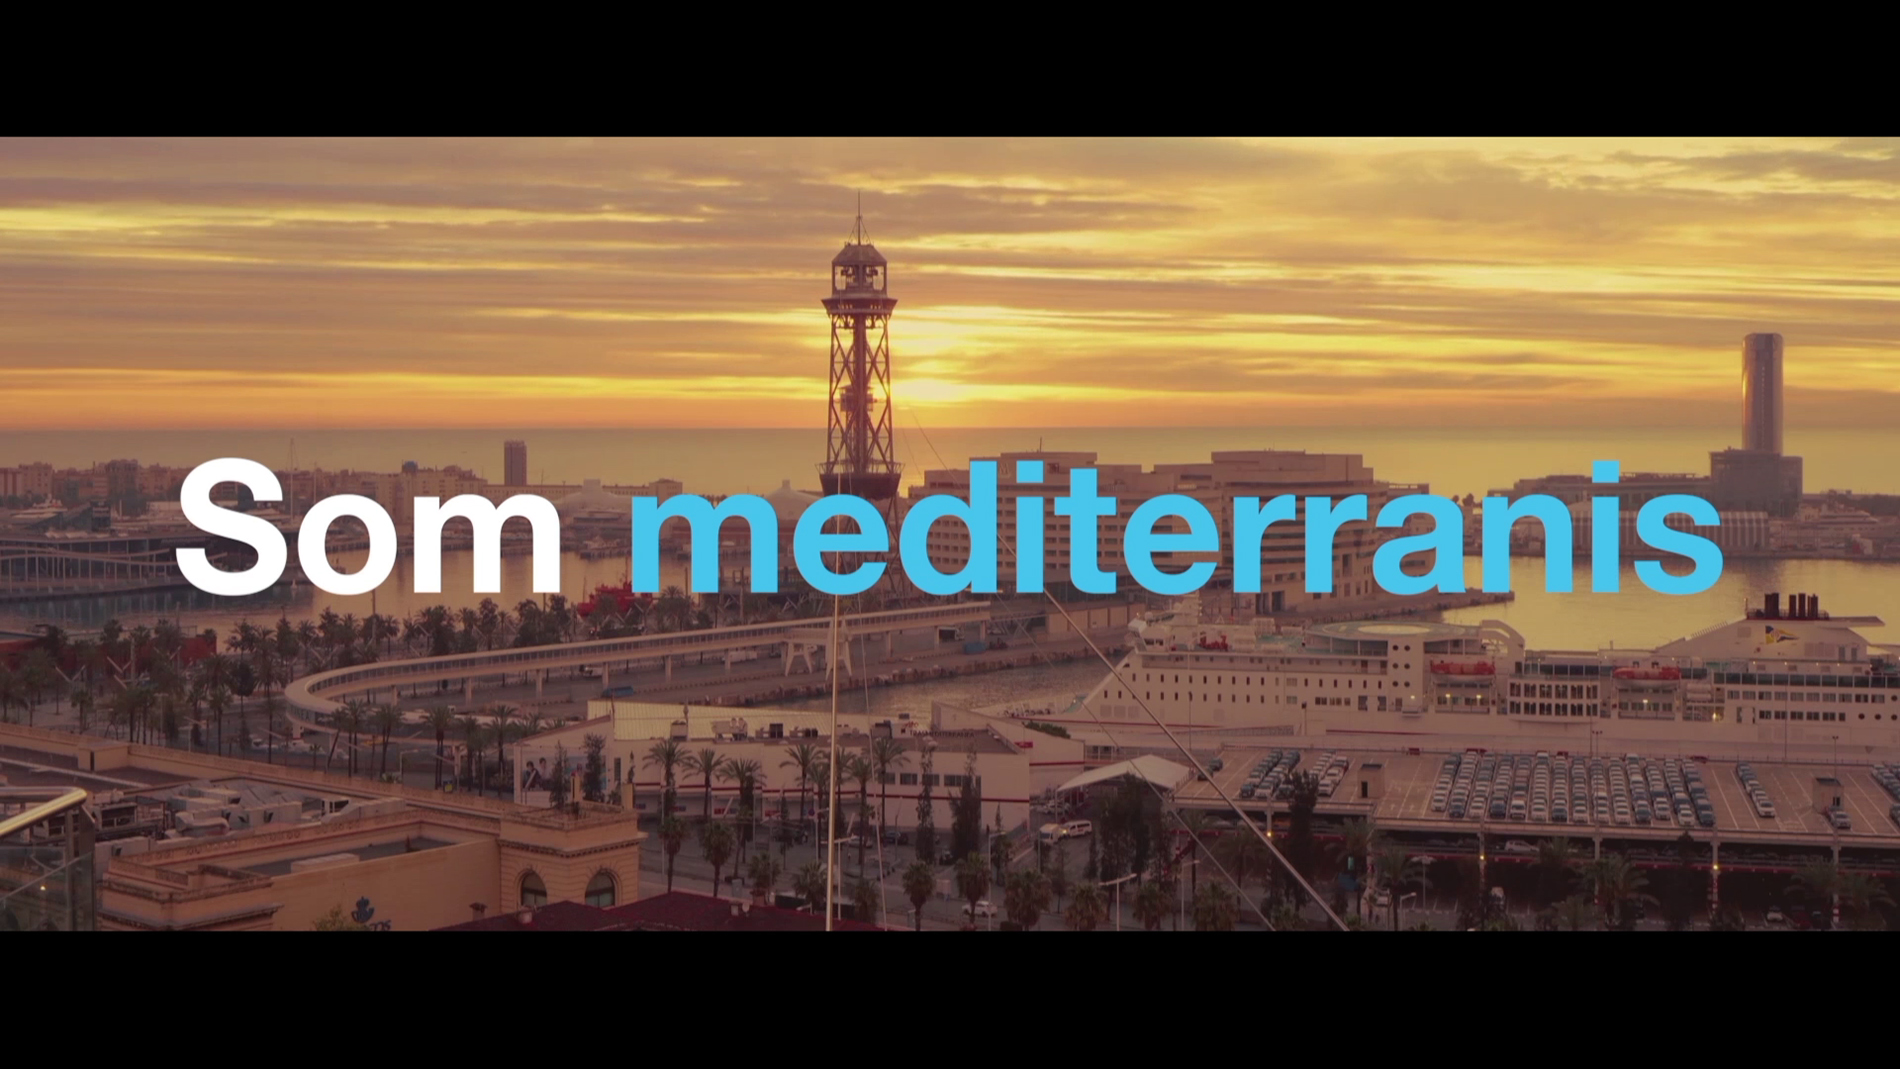 Som mediterranis